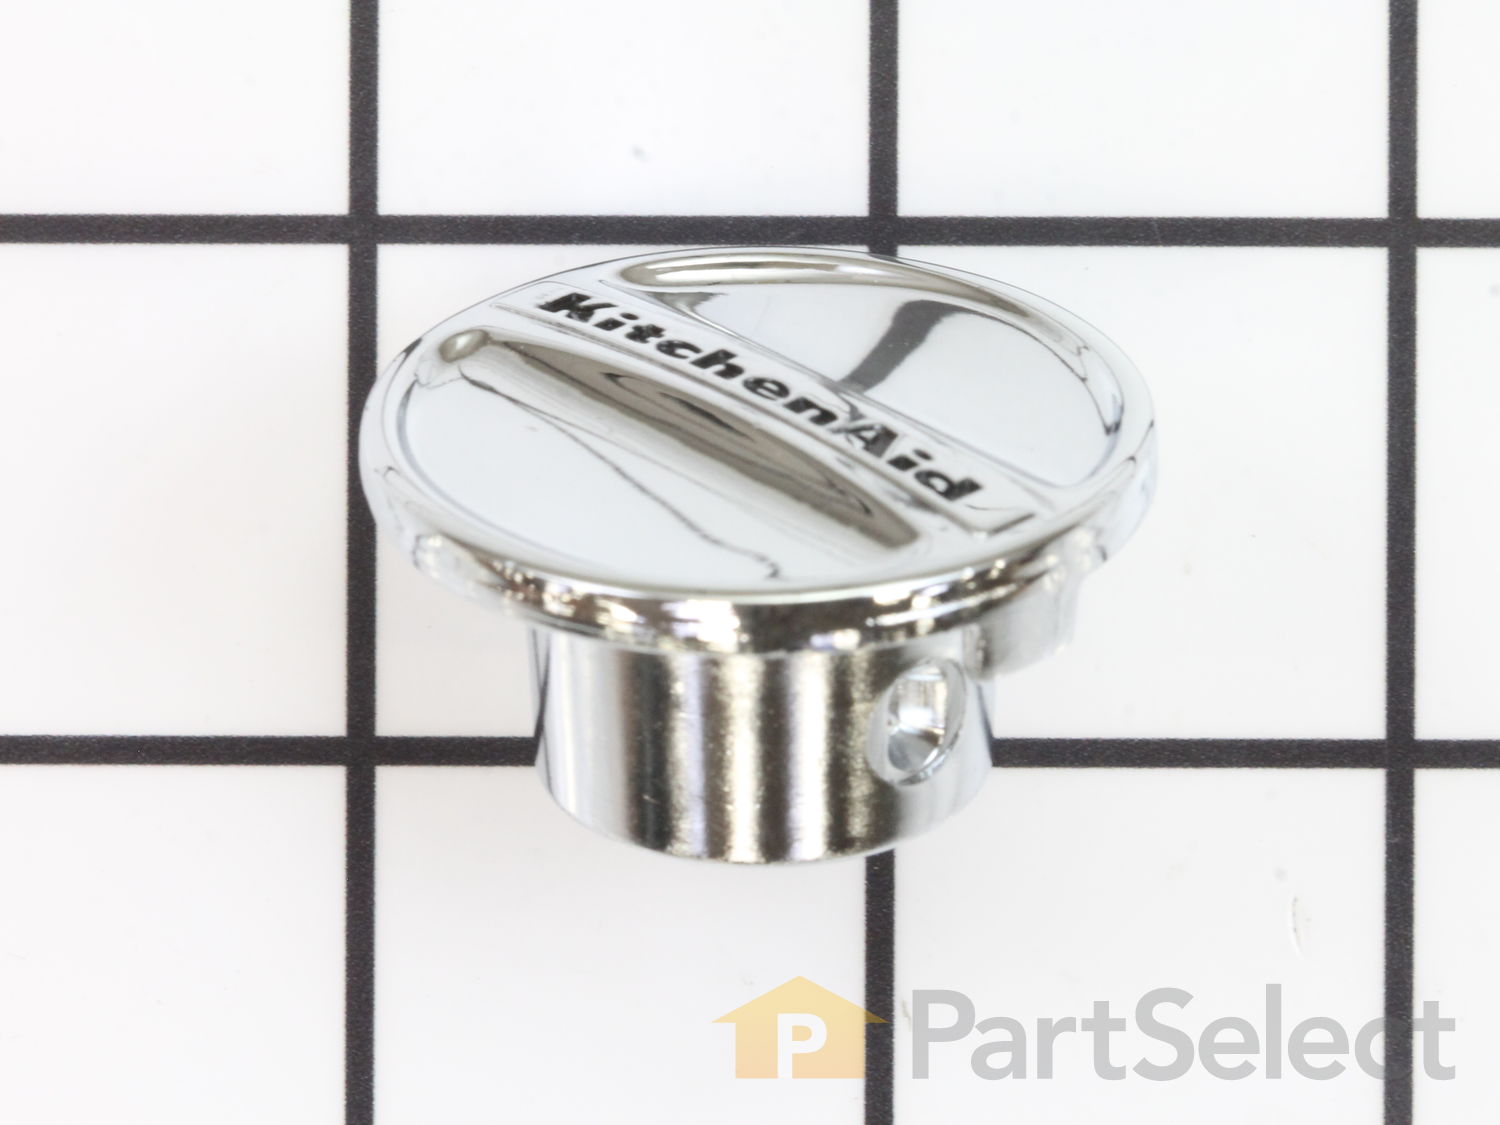 stainless steel Mixer Knob for Kitchenaid Replacement Parts,Kitchenaid  Mixer Replacement,Mixer Screw Attachment for Kitchenaid